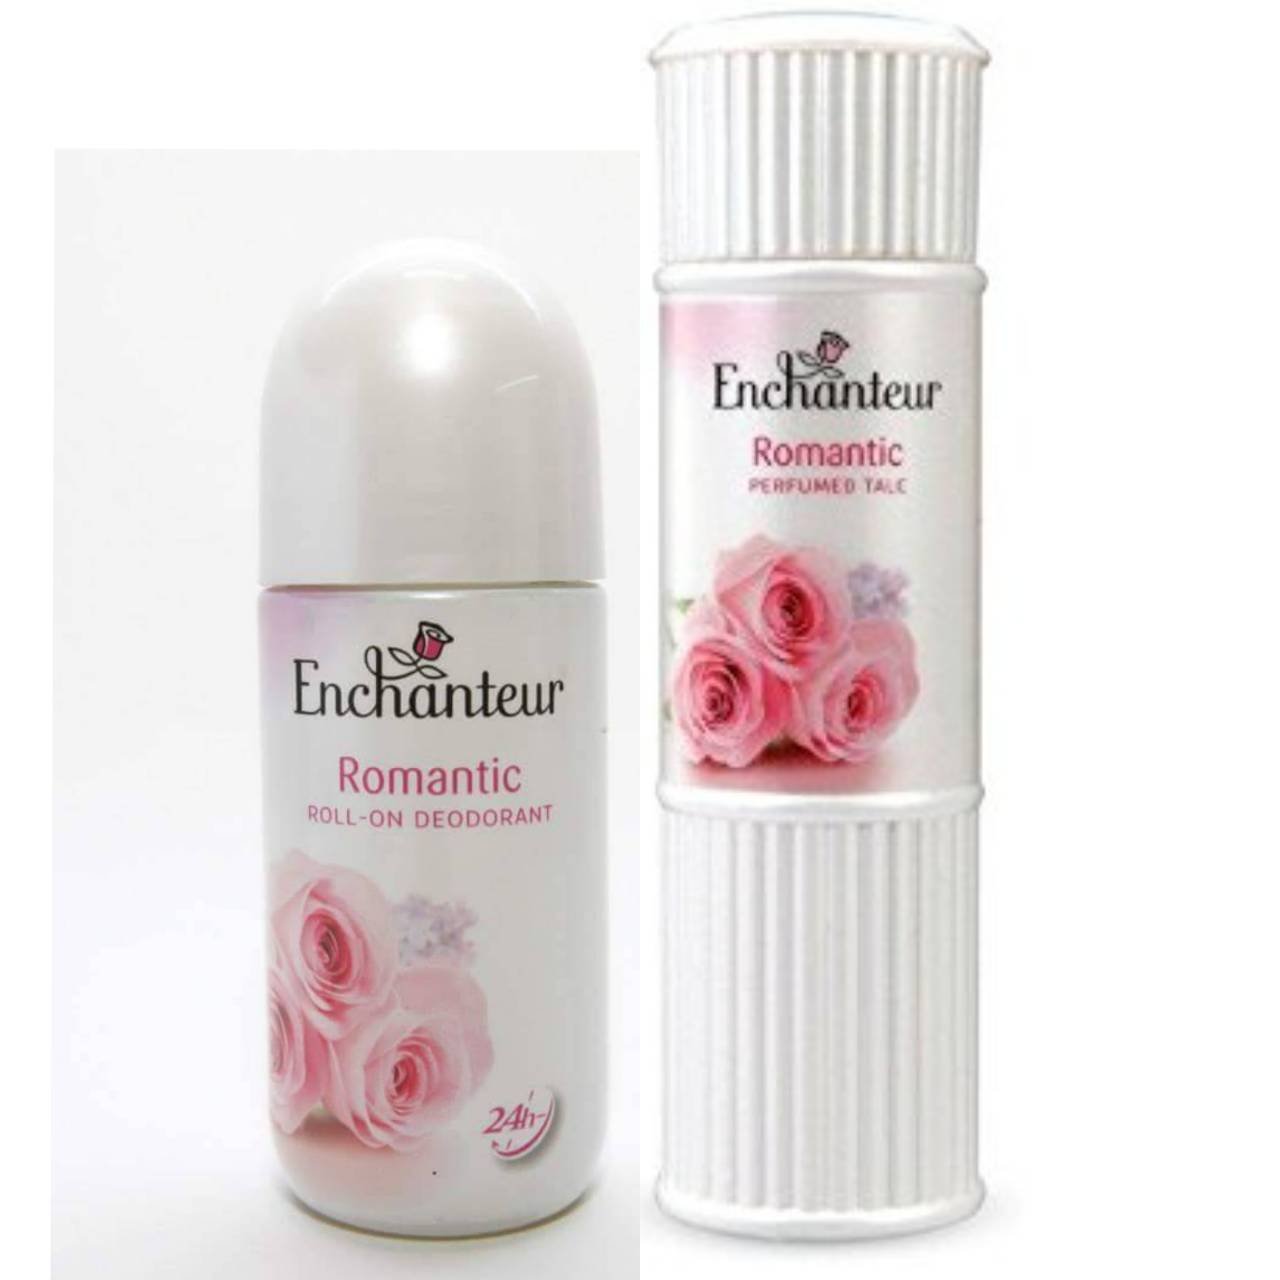 Enchanteur Romantic Roll-On Deodorant + Enchanteur Romantic Perfumed Talc Fragrance Powder, by Thai Premium